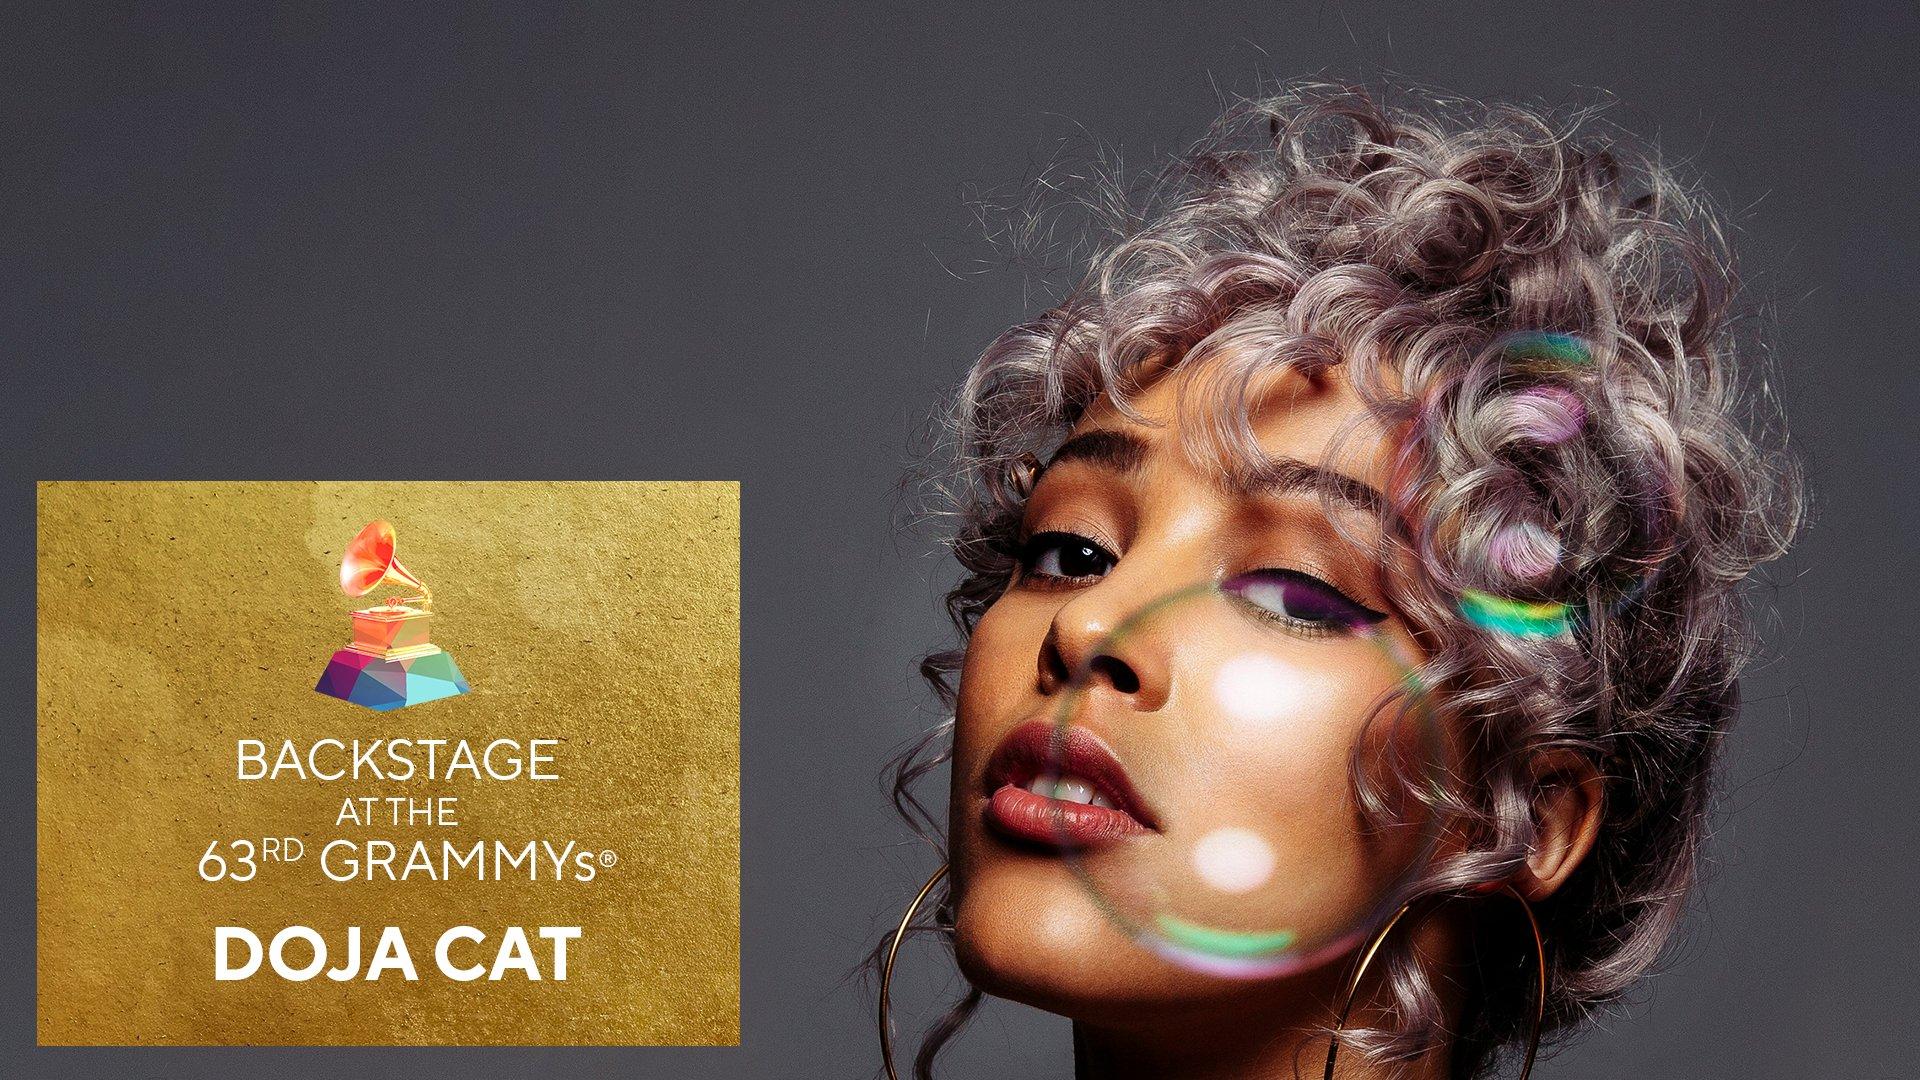 Doja Cat Talks Backstage At The 63rd GRAMMY Awards